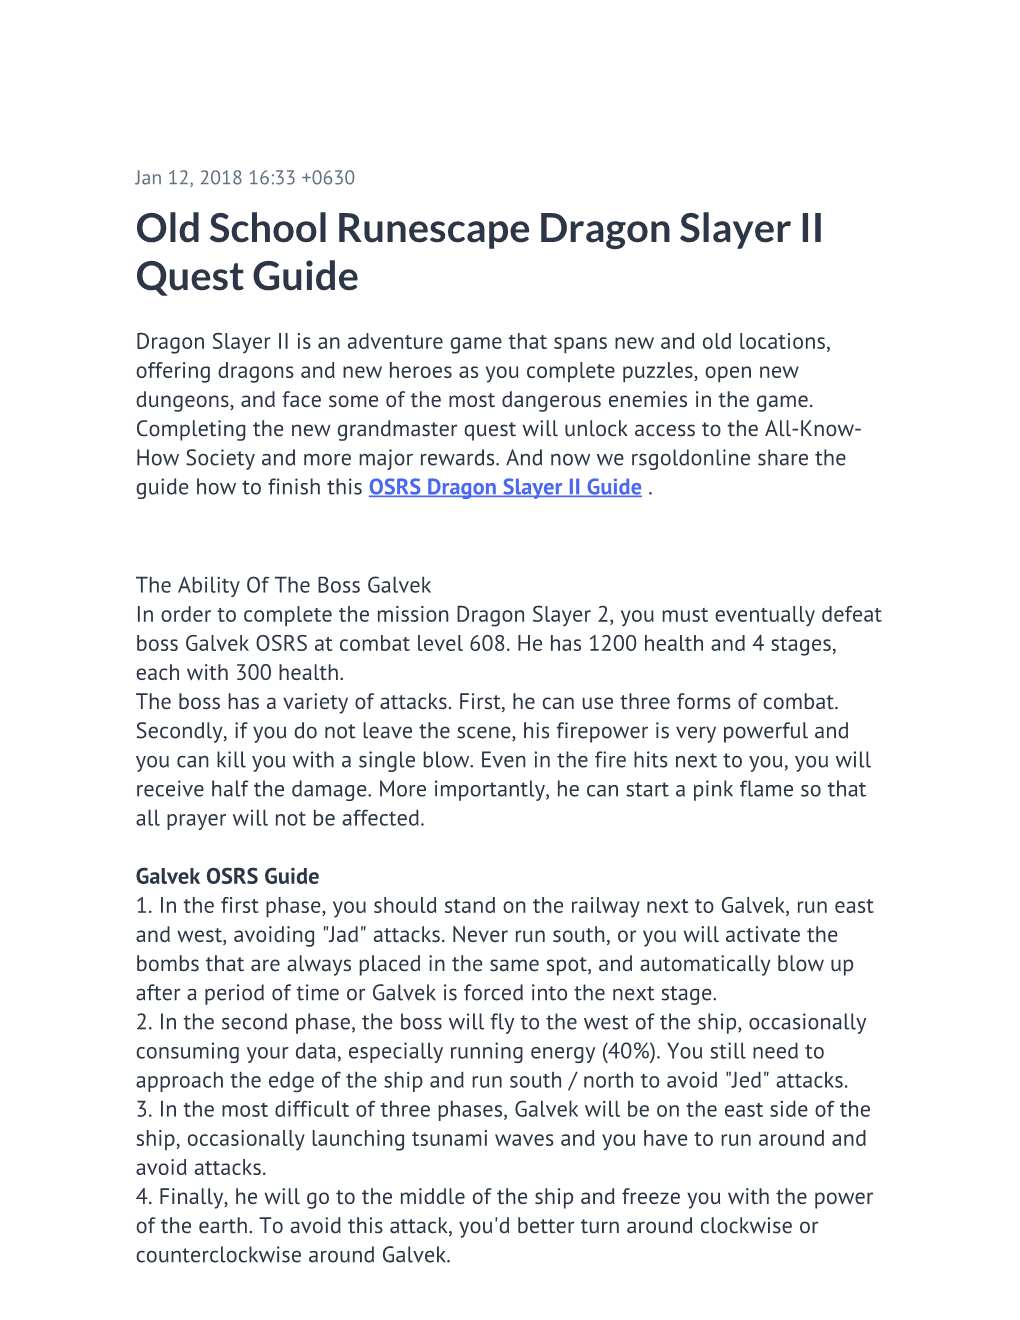 Old School Runescape Dragon Slayer II Quest Guide